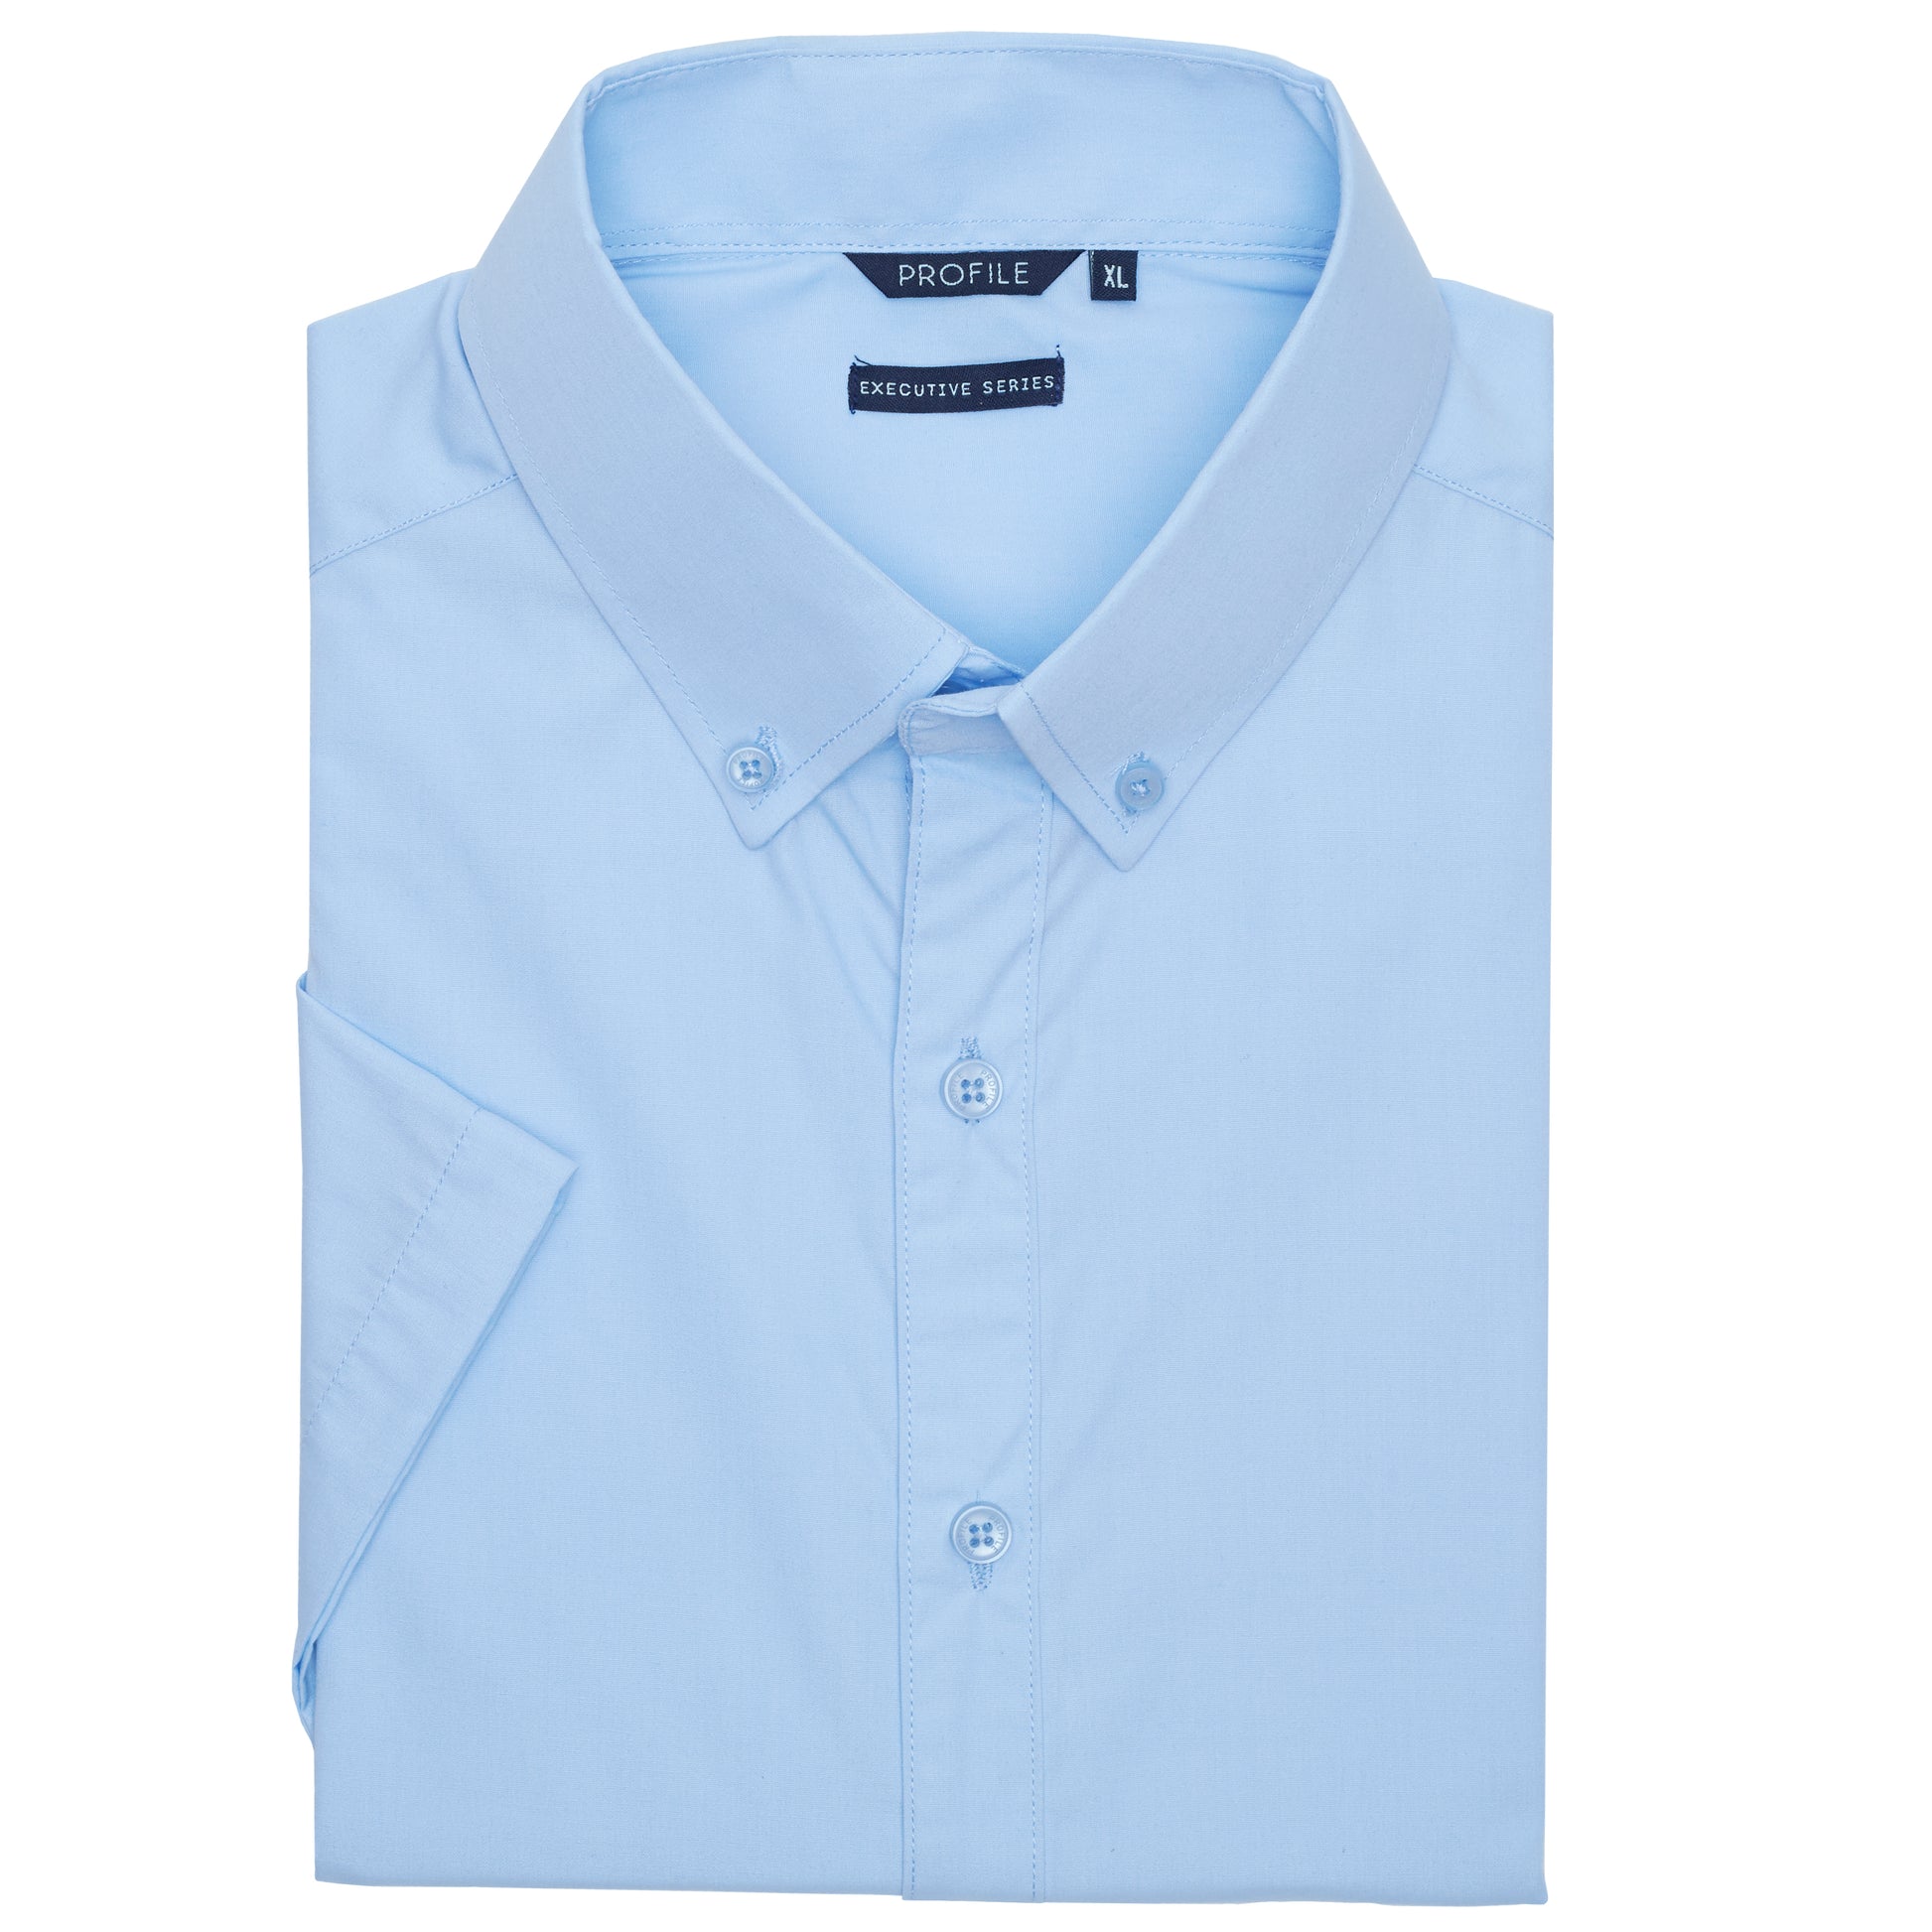 Mens SLIM FIT Corporate Wear Button Down Short Sleeve LIGHT BLUE Shirt - IDENTITY Apparel Shop